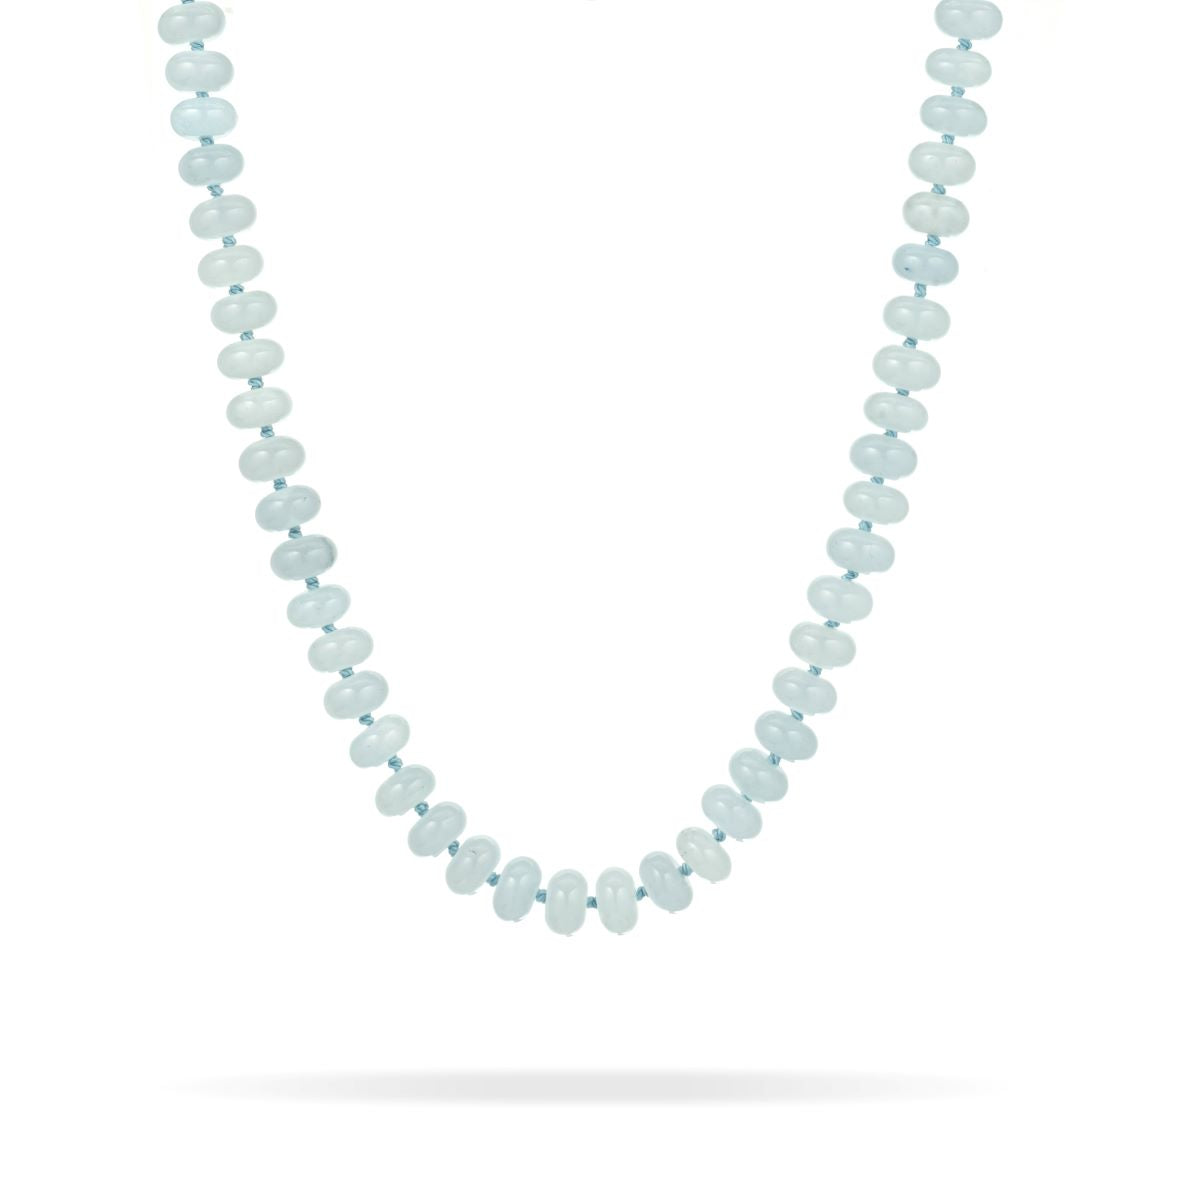 Shades of Light Blue Gemstone Necklace